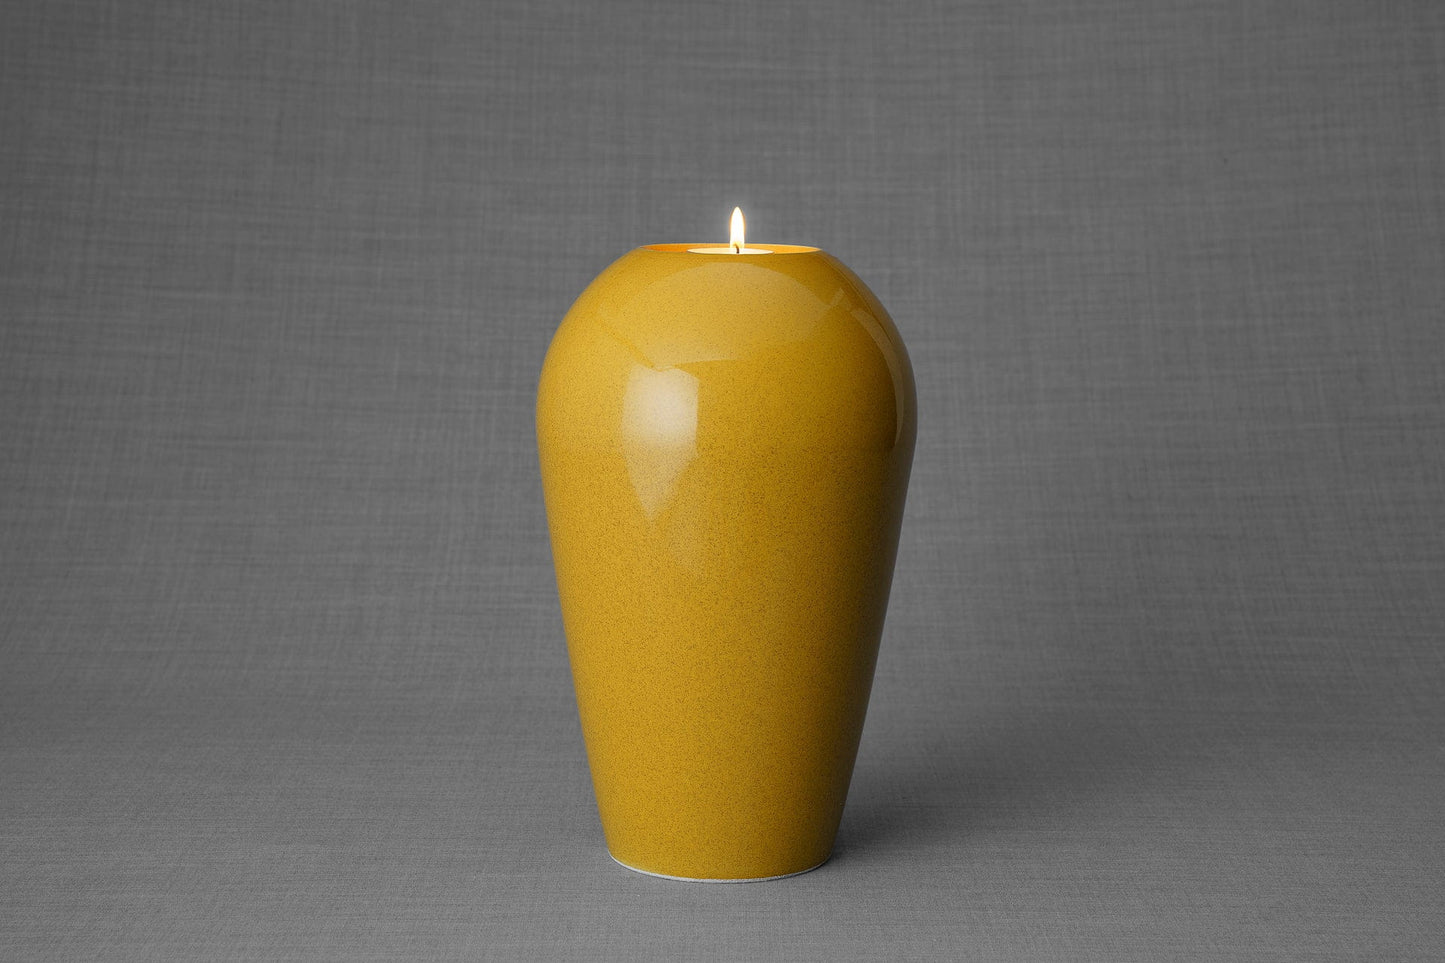 Pulvis Art Urns Adult Size Urn Memorial Cremation Urn "Serenity" - Large | Amber Yellow | Ceramic